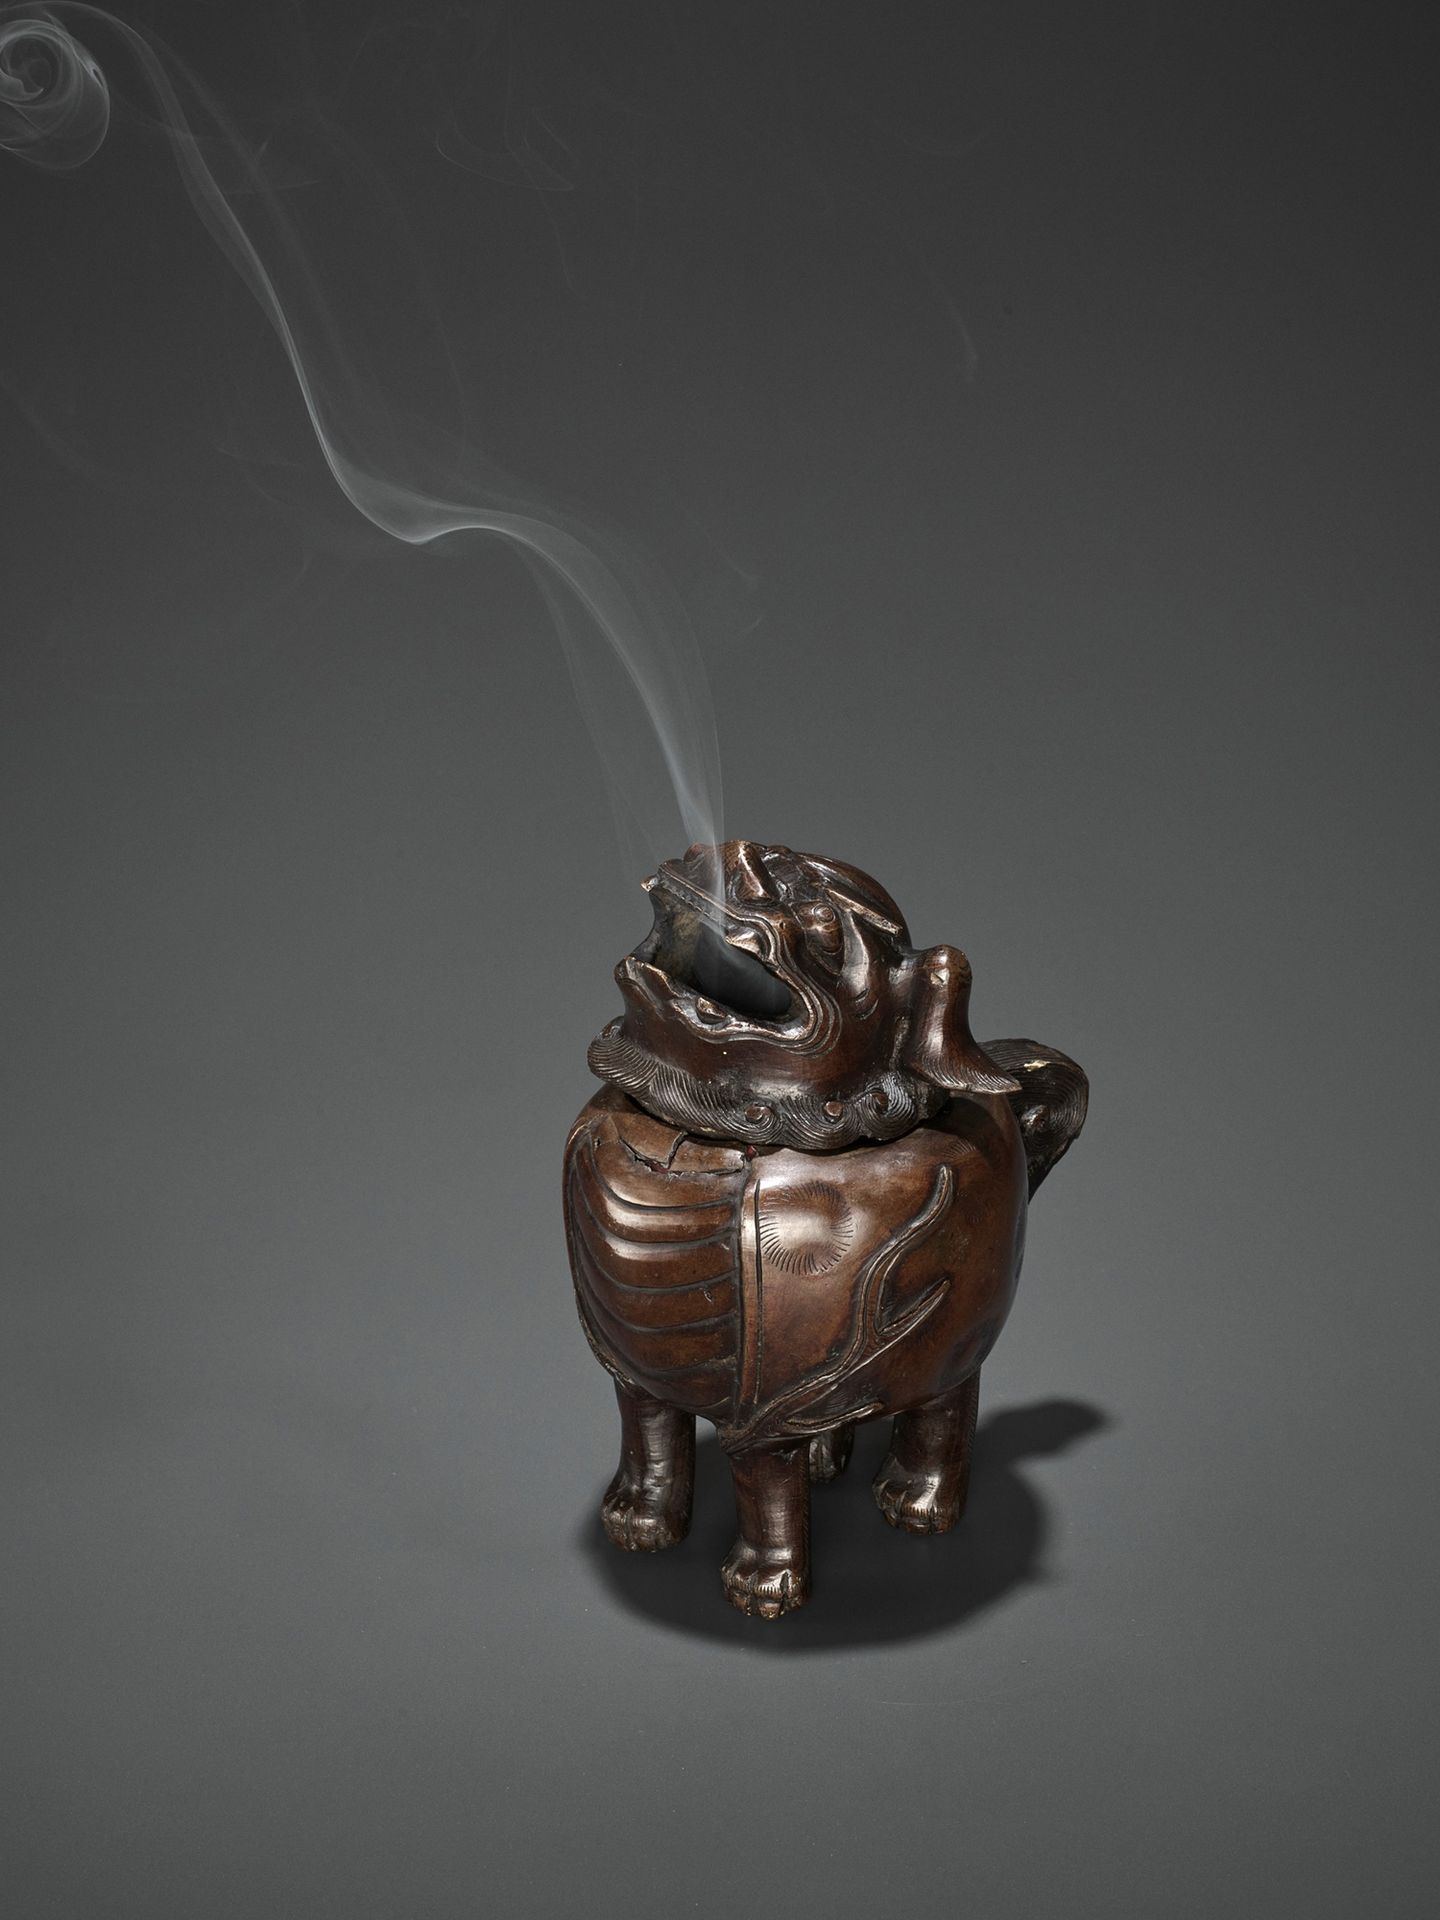 A BRONZE LUDUAN-FORM CENSER AND COVER, 17TH CENTURY 一件青铜鲁道夫造型的罐子和盖子，17世纪
中国，17世纪&hellip;